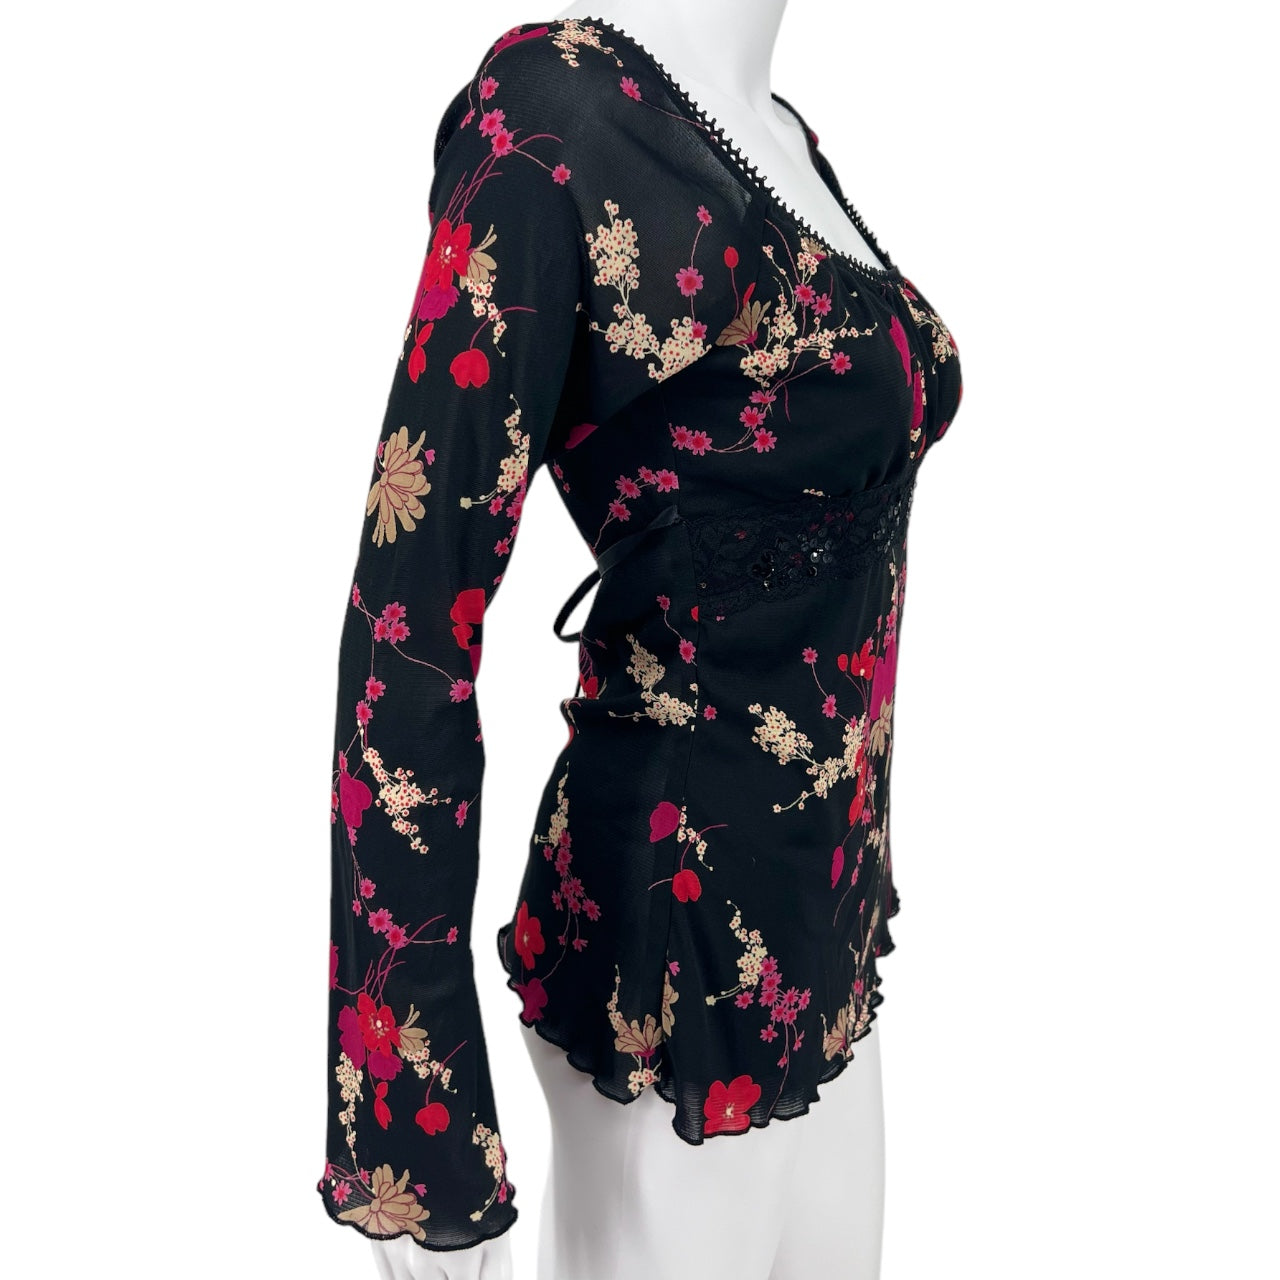 Vintage Y2K Micromesh Floral Black Blouse Black Lace Sequins Ruffle Hem Flared Sleeves S/M